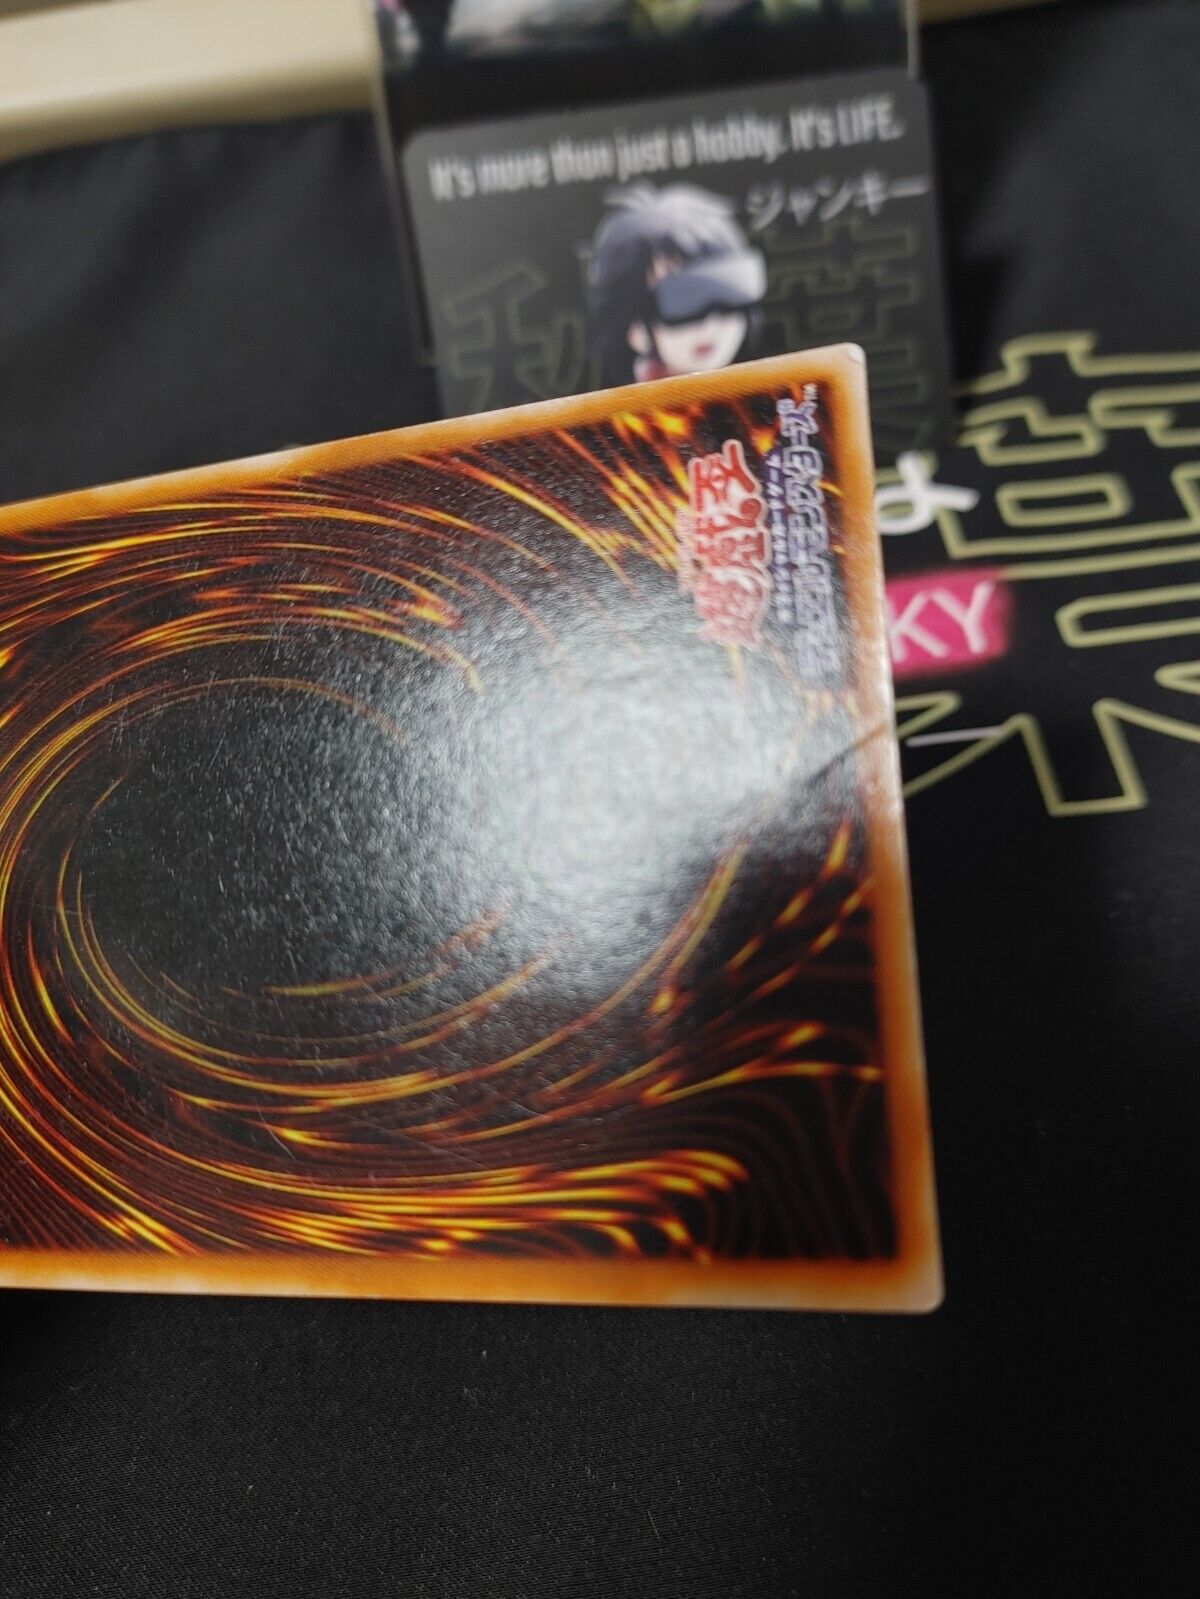 Dark Magician Girl Yu-Gi-Oh Yugioh P4-01 Ultra Rare Konami JAPAN Release MP-HP